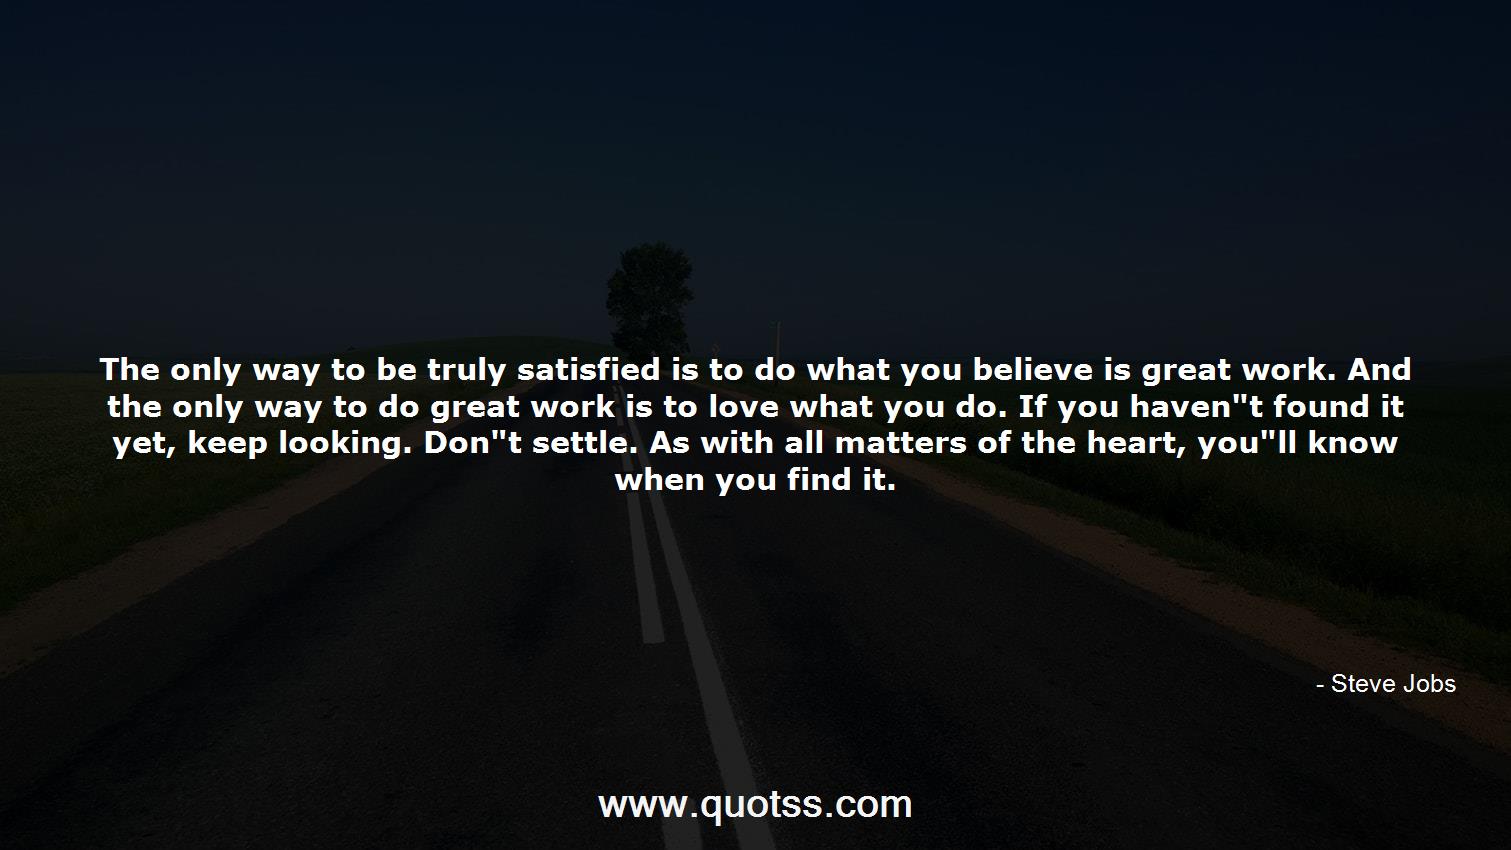 Steve Jobs Quote on Quotss